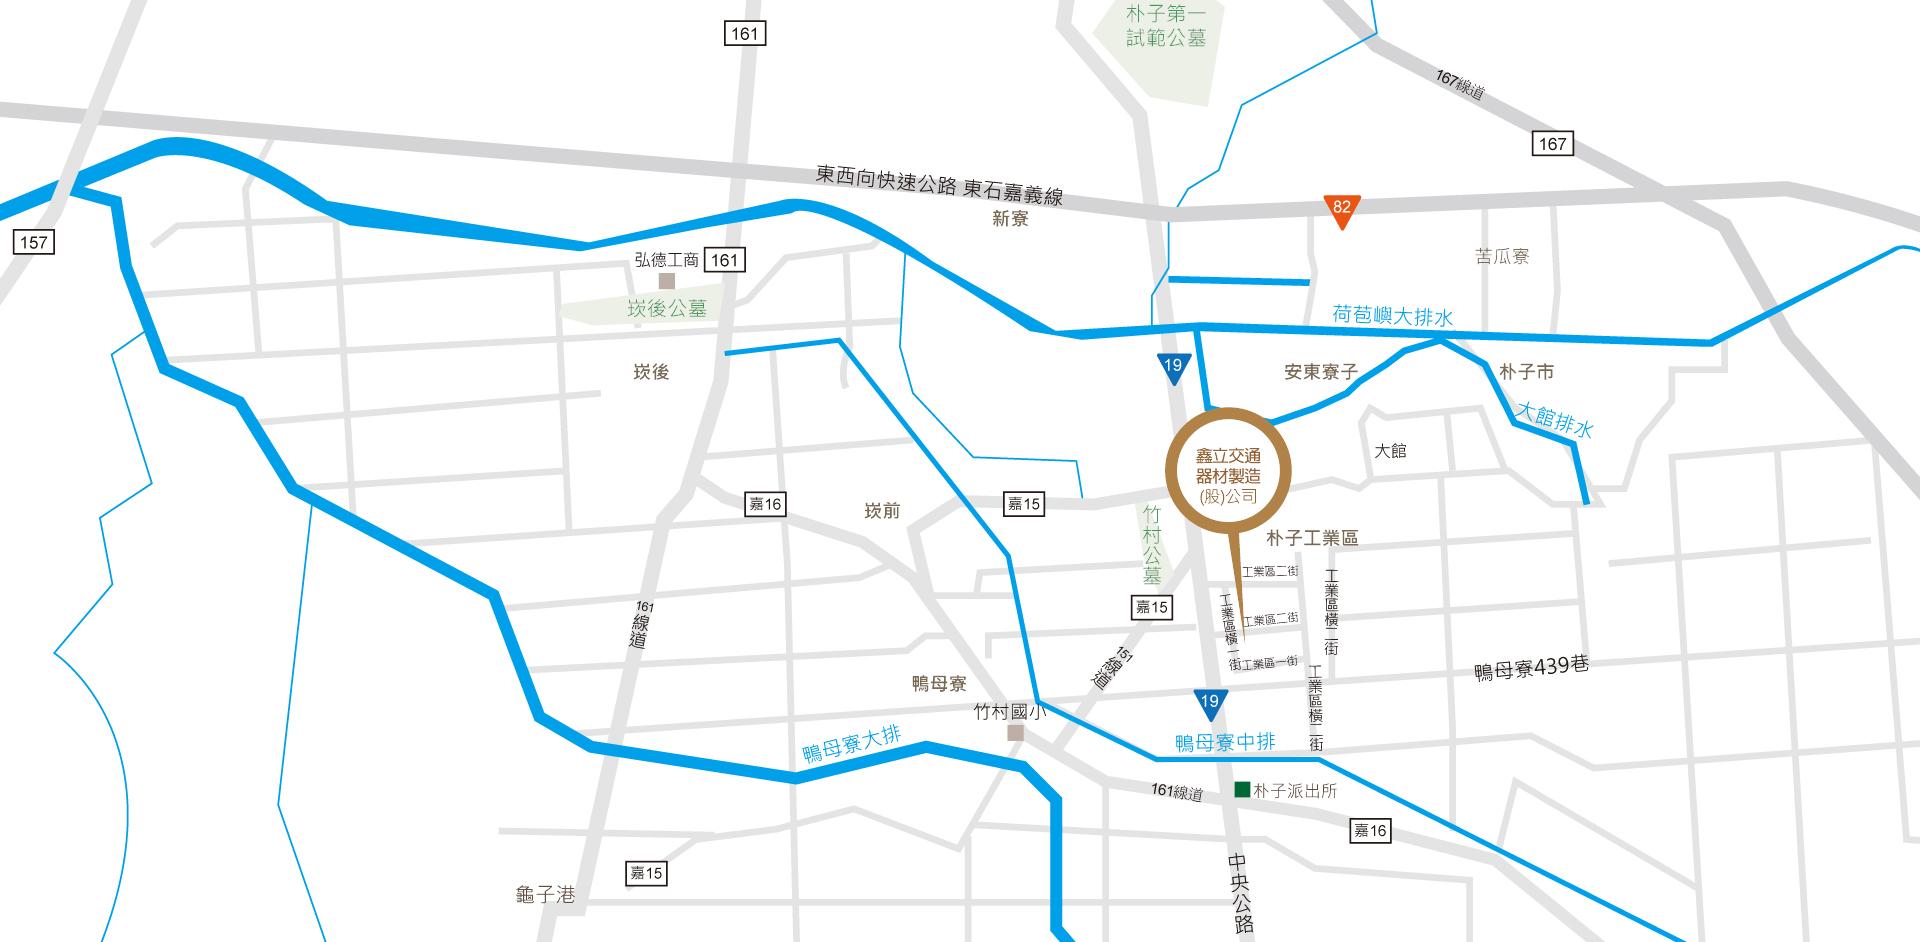 SHIN LI AUTO PARTS CO,.LTD.<br>
Add: No.6 2nd Street Puzi Industrial Park,Puzi City,Chiayi County 613,Taiwan